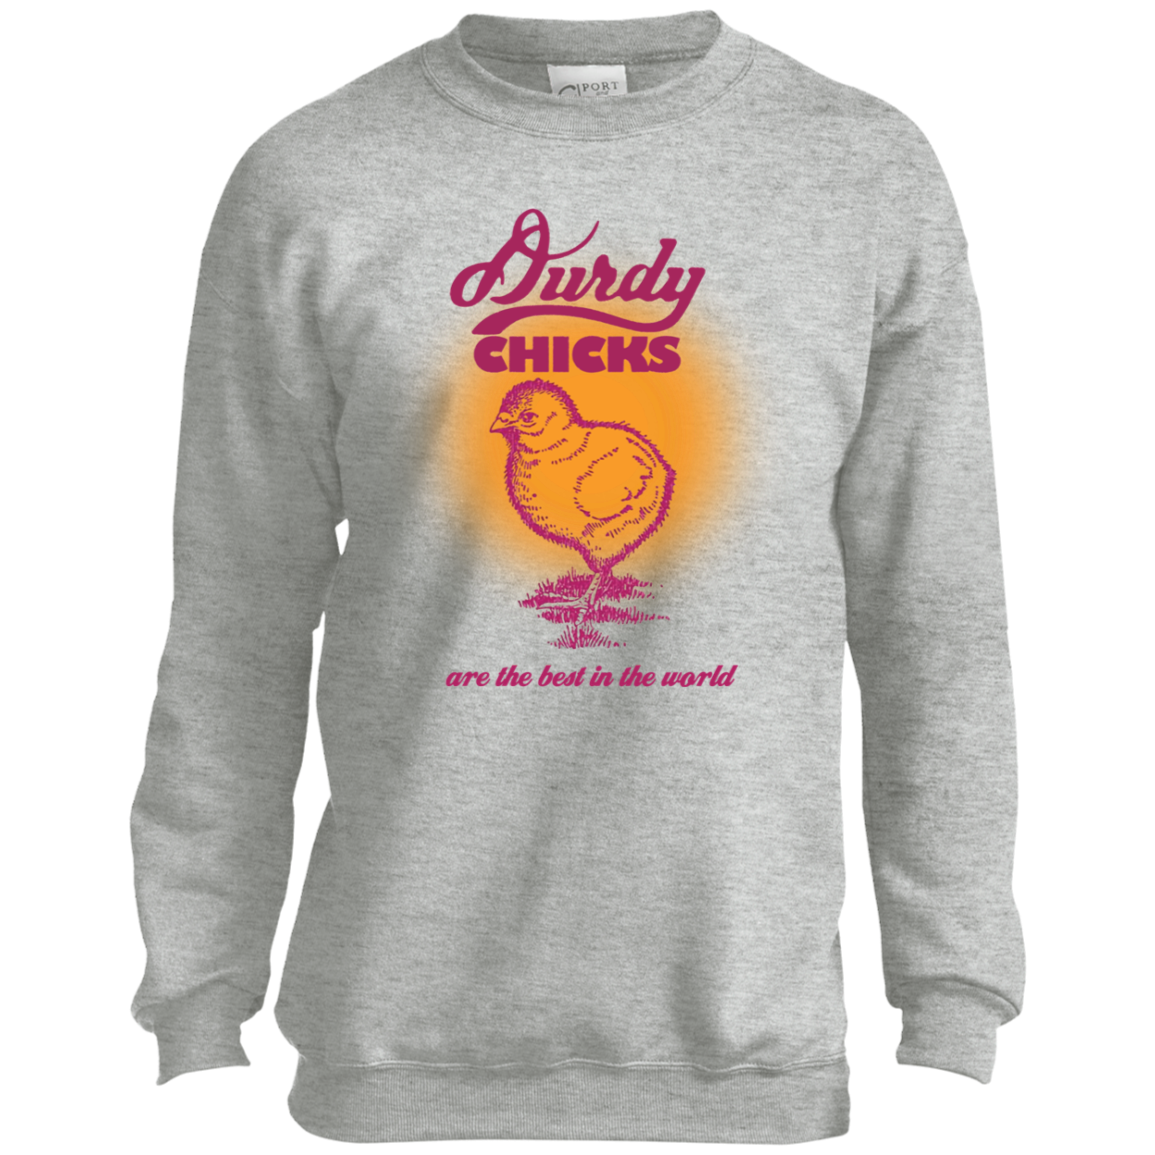 Durdy Chicks Port and Co. Youth Crewneck Sweatshirt